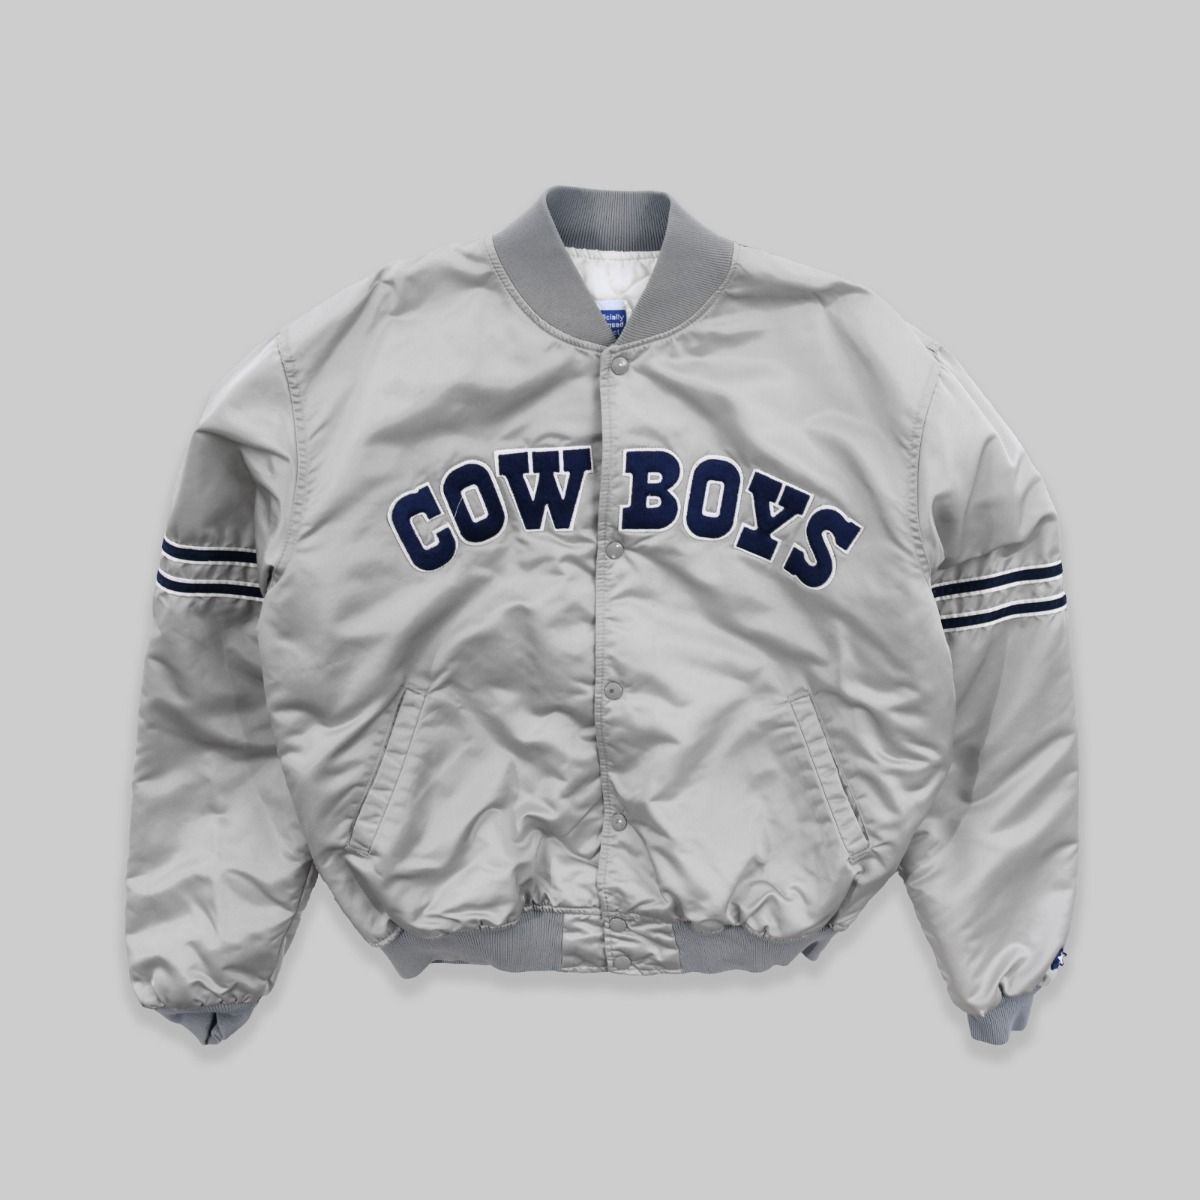 Dallas Cowboys X Starter 1980s Satin Jacket